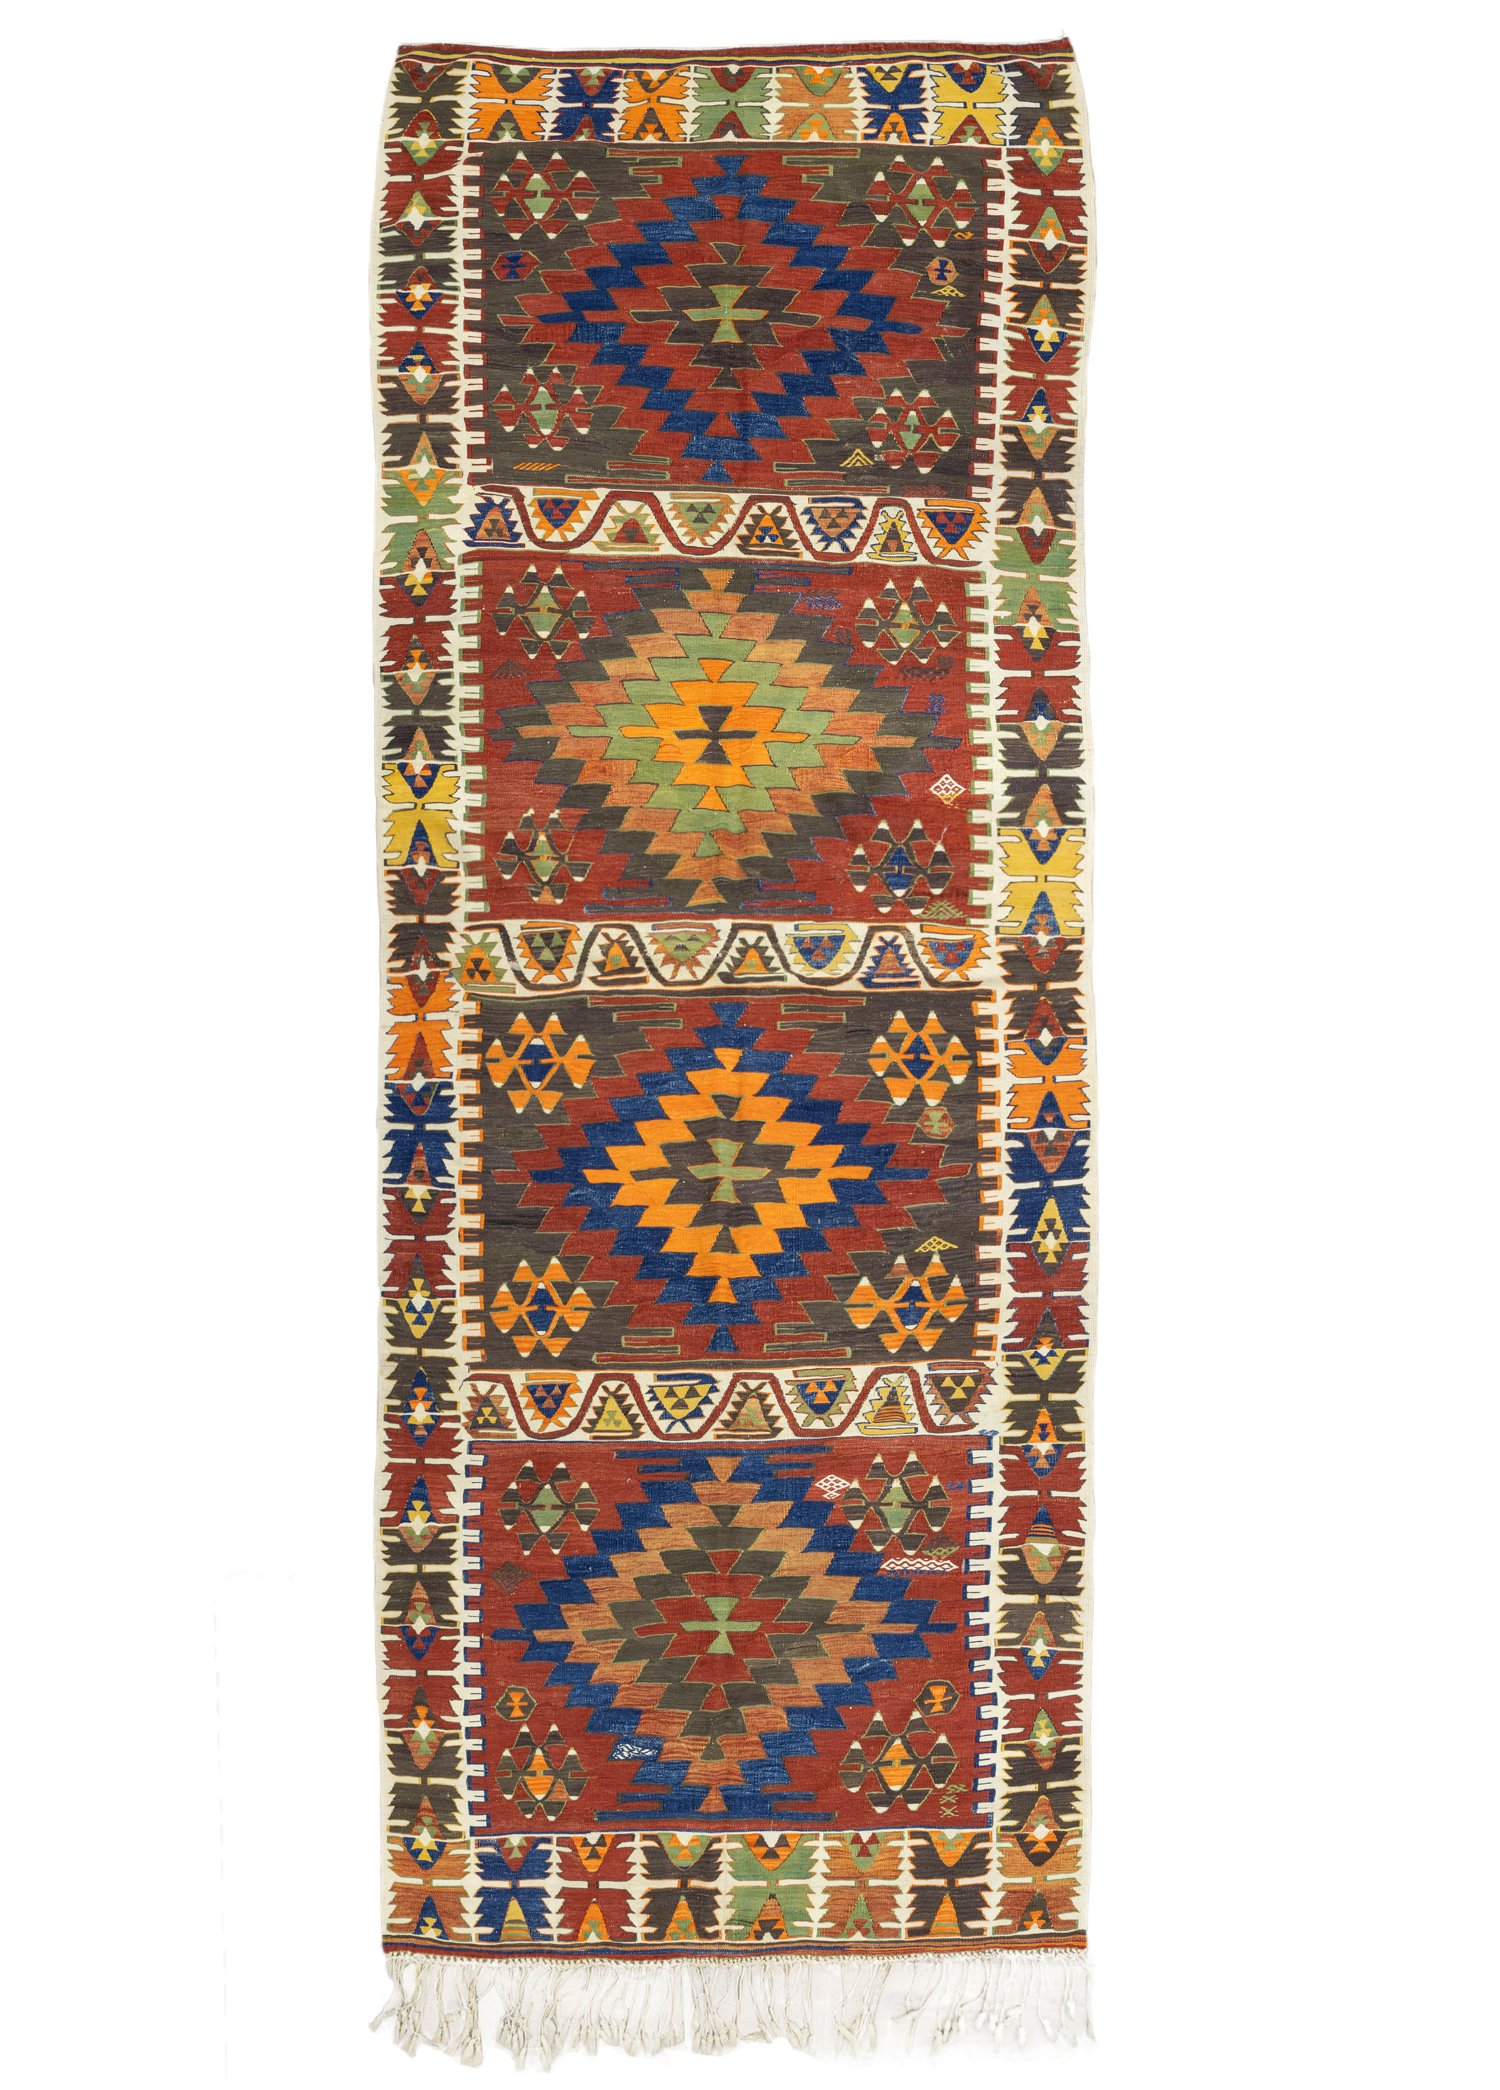 Konya, Bulumya Antiques Handwoven Kilim Runner 149x417 cm